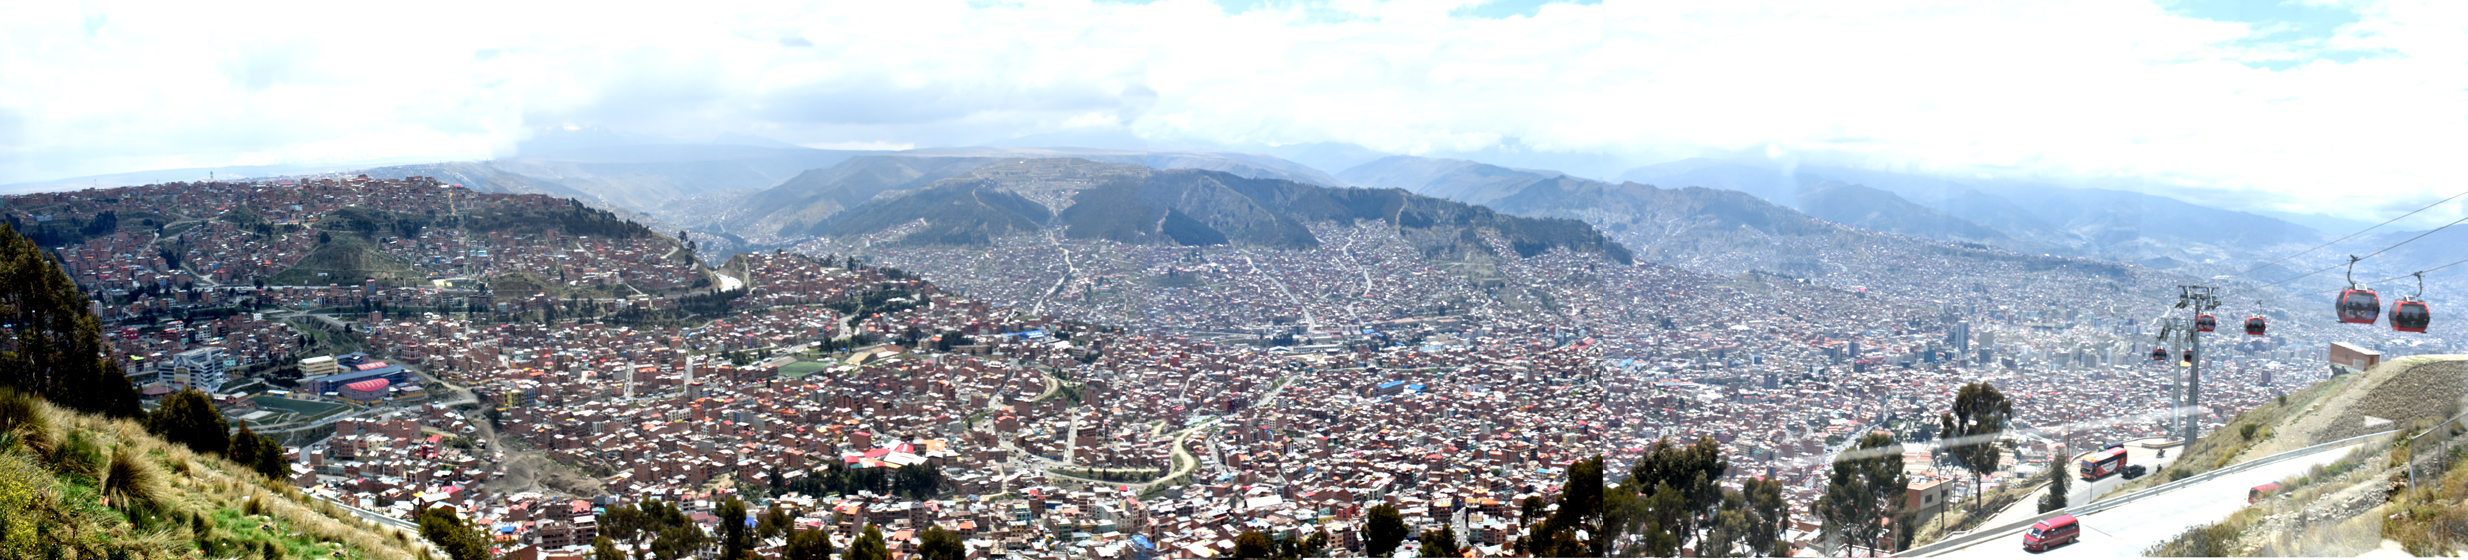 view of La Paz, Bolivia, from El Alto teleferico station